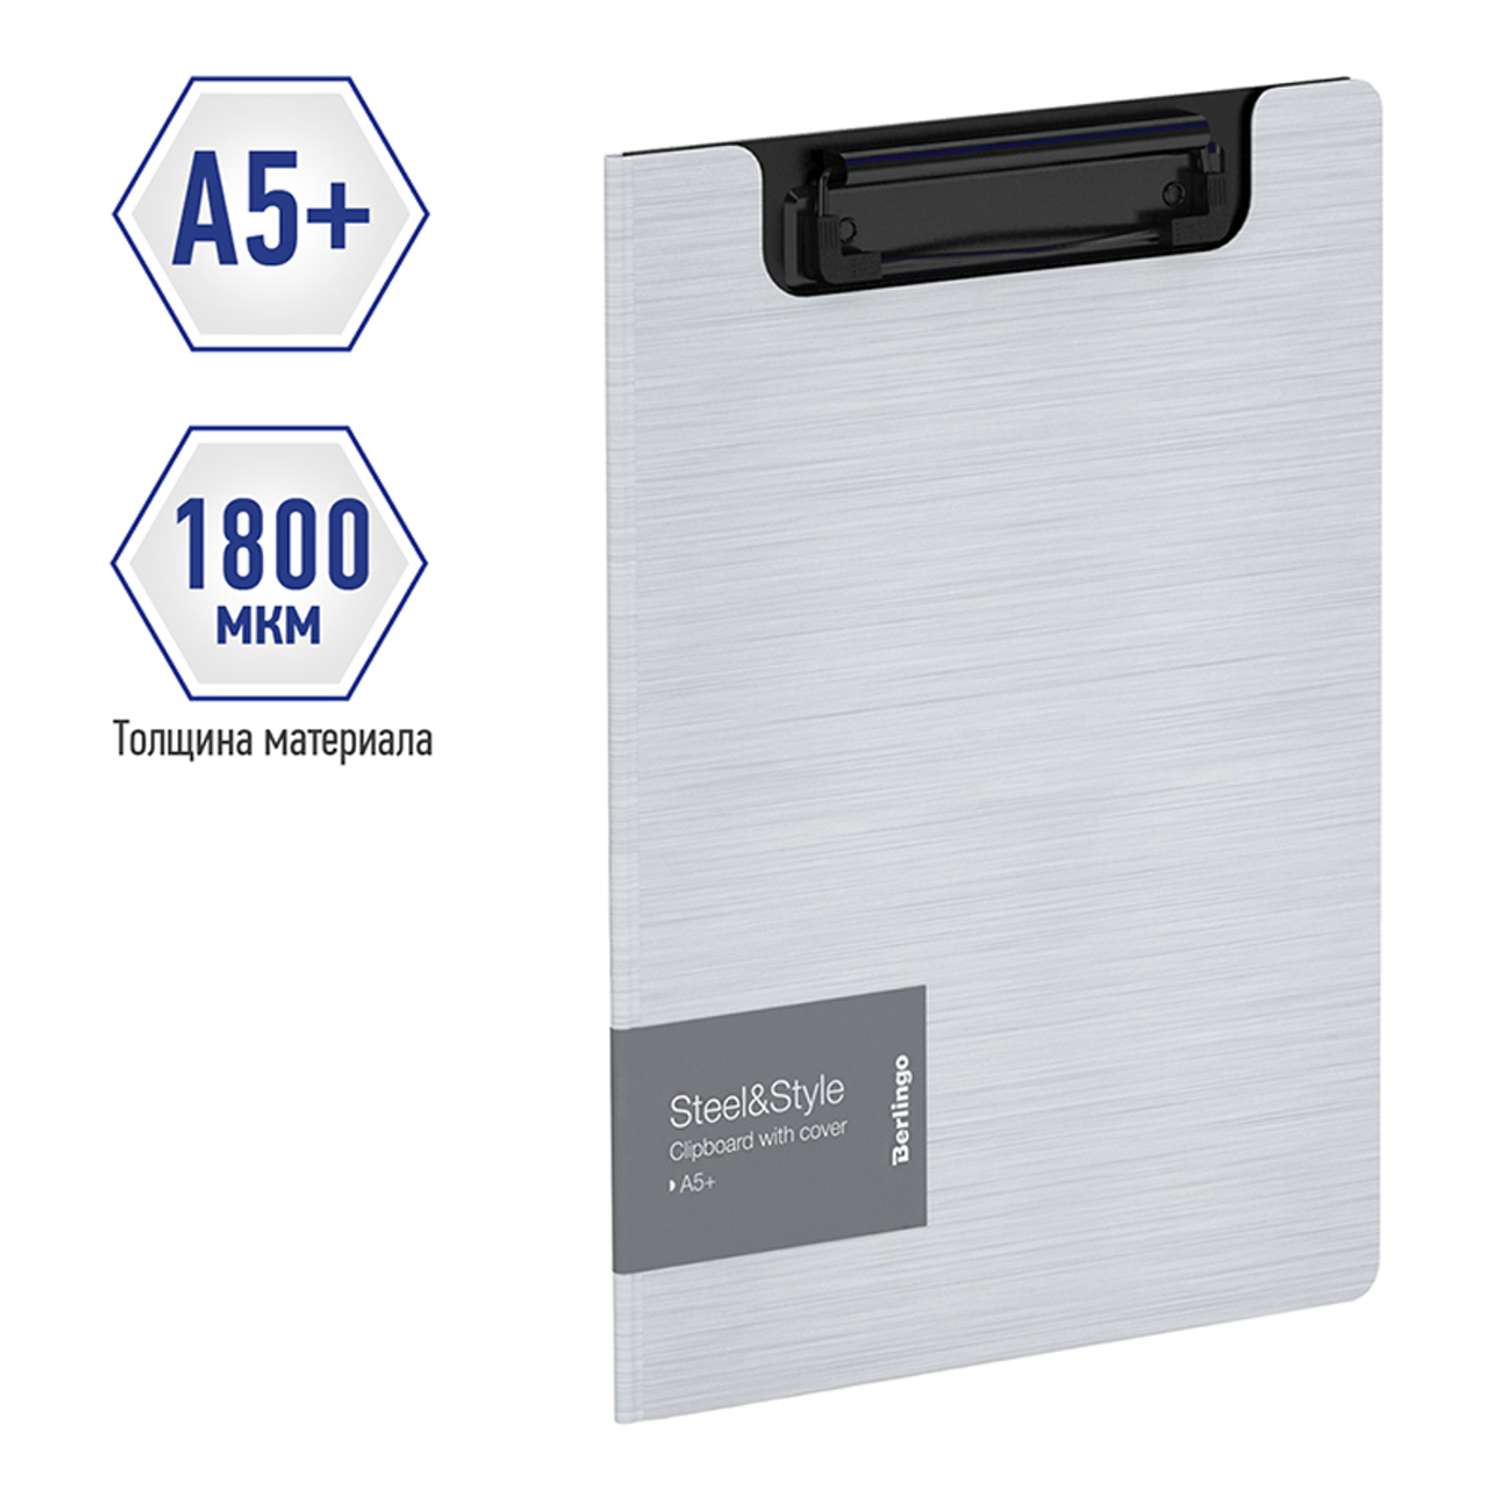 Папка-планшет с зажимом Berlingo Steel ampStyle А5+ 1800мкм пластик полифом белая - фото 2